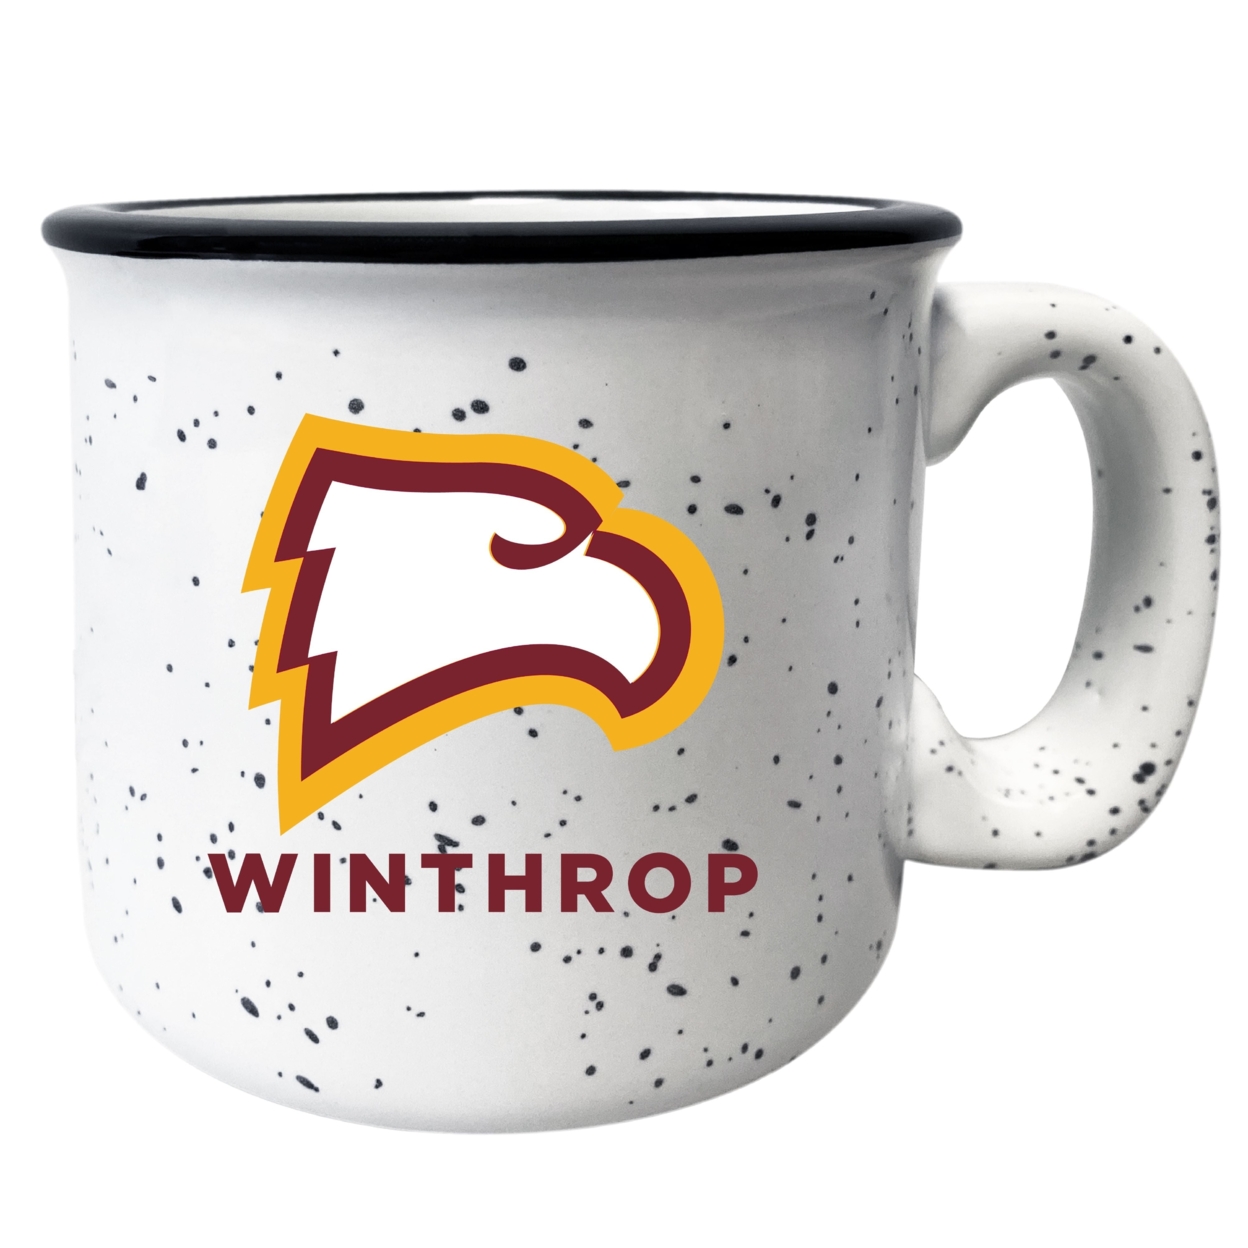 Winthrop University Speckled Ceramic Camper Coffee Mug - Choose Your Color